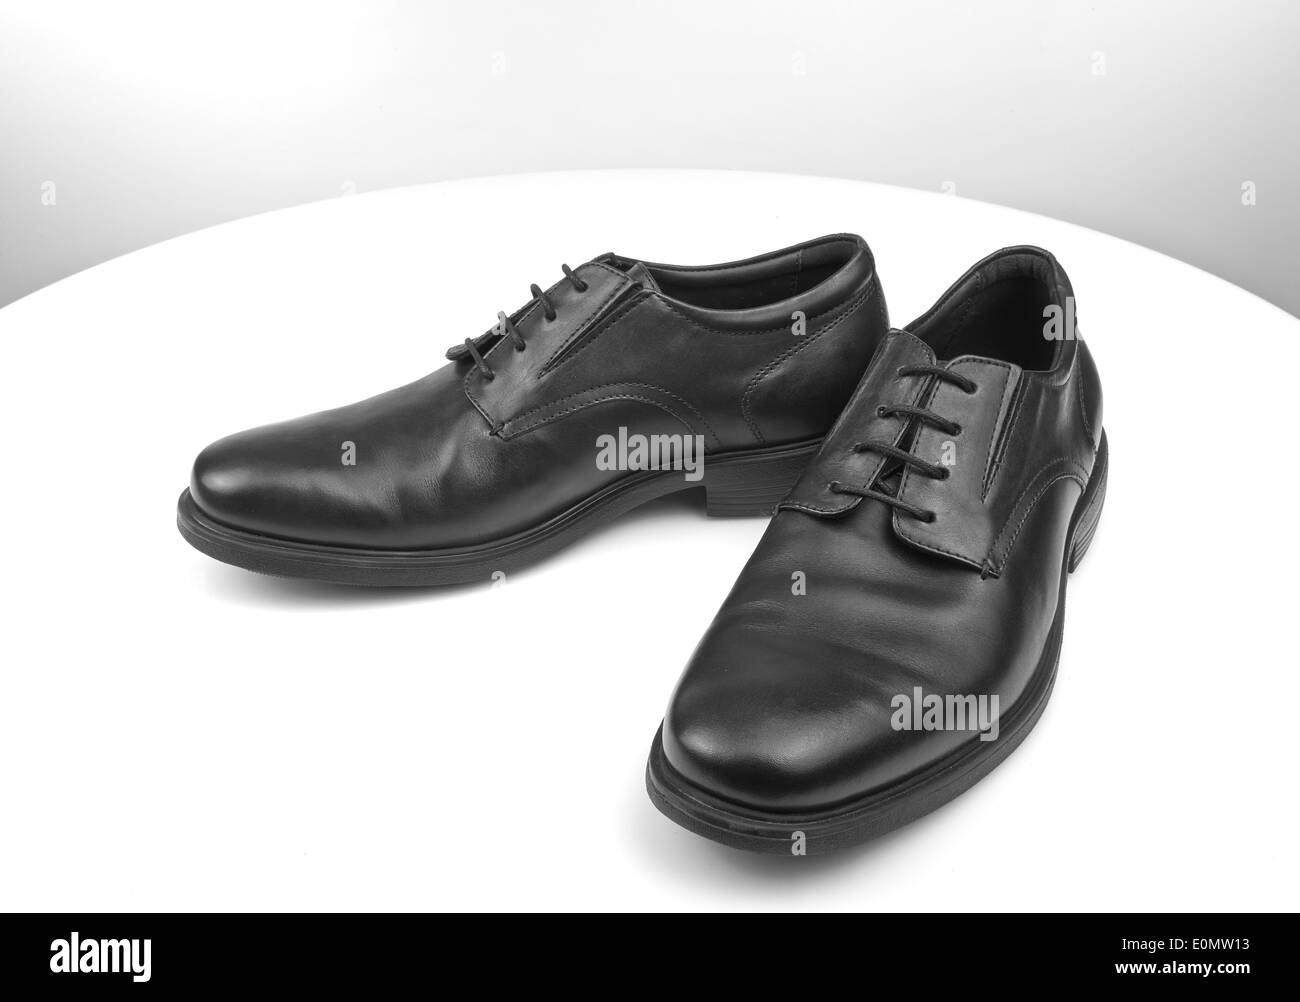 Shoe shine Black and White Stock Photos & Images - Alamy